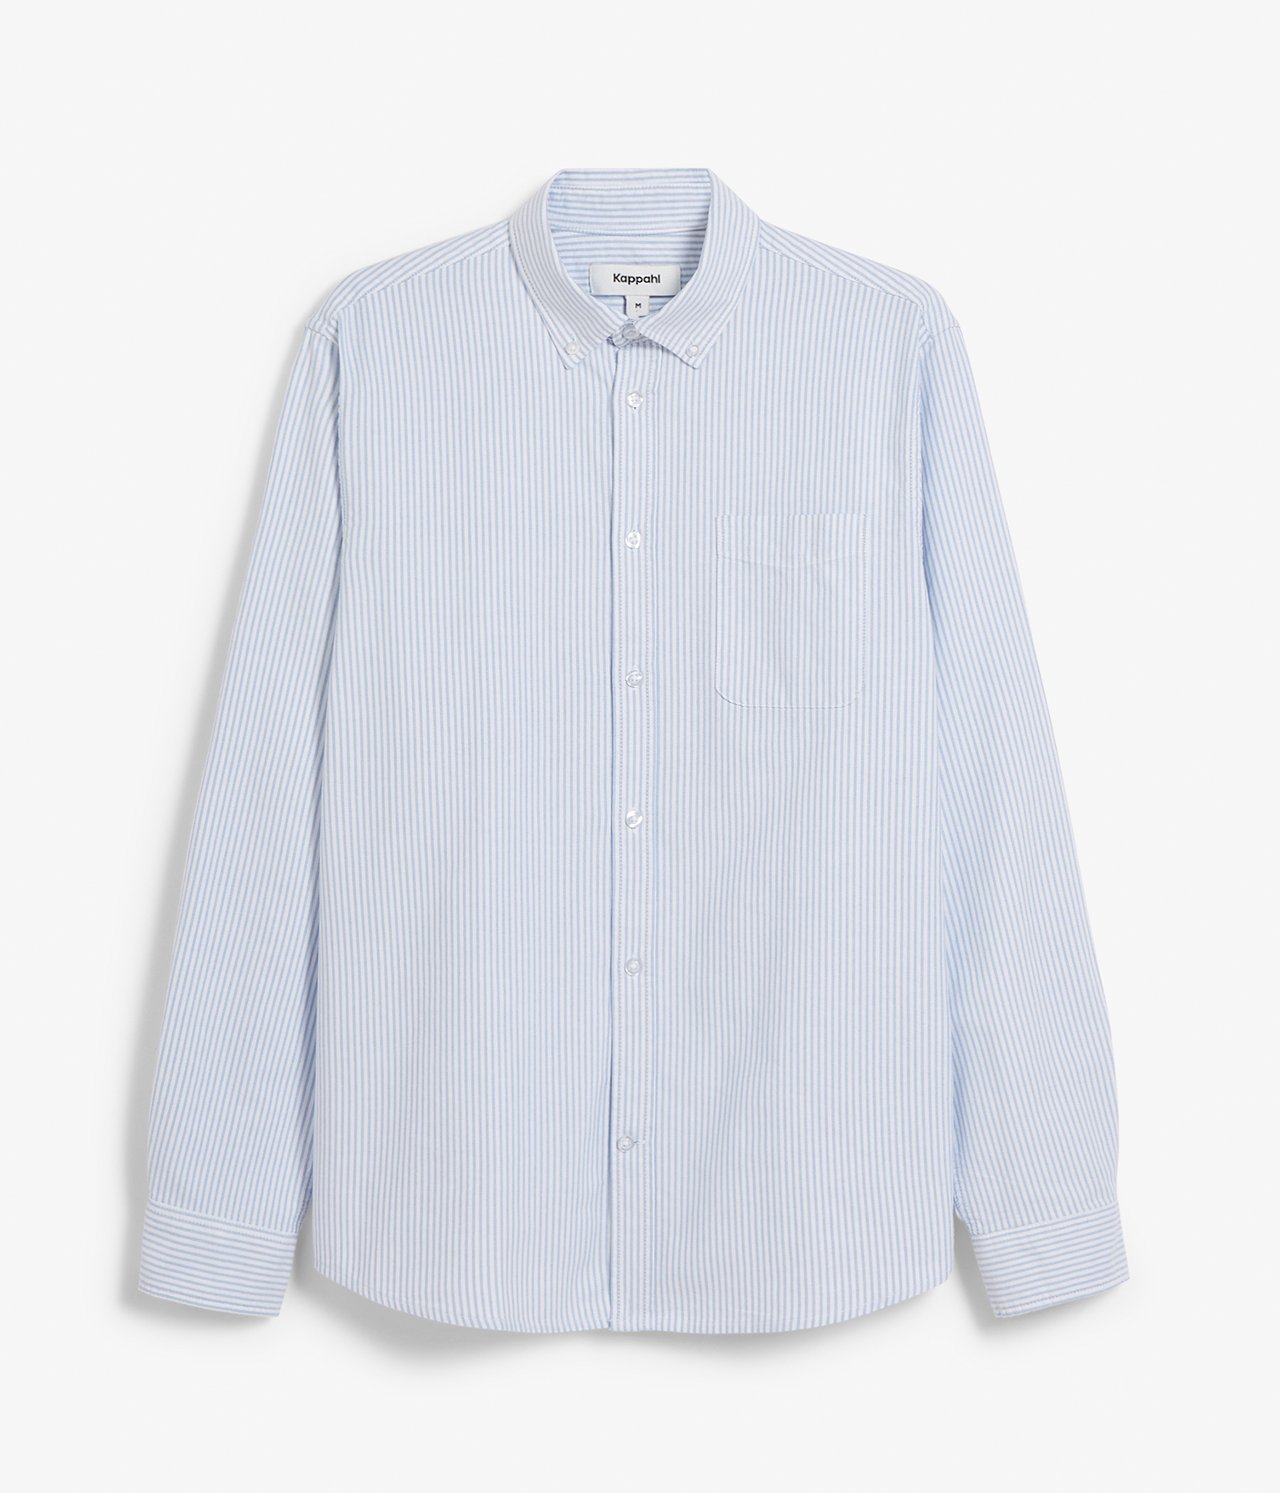 Koszula oxford w paski, regular fit - Niebieski - 8